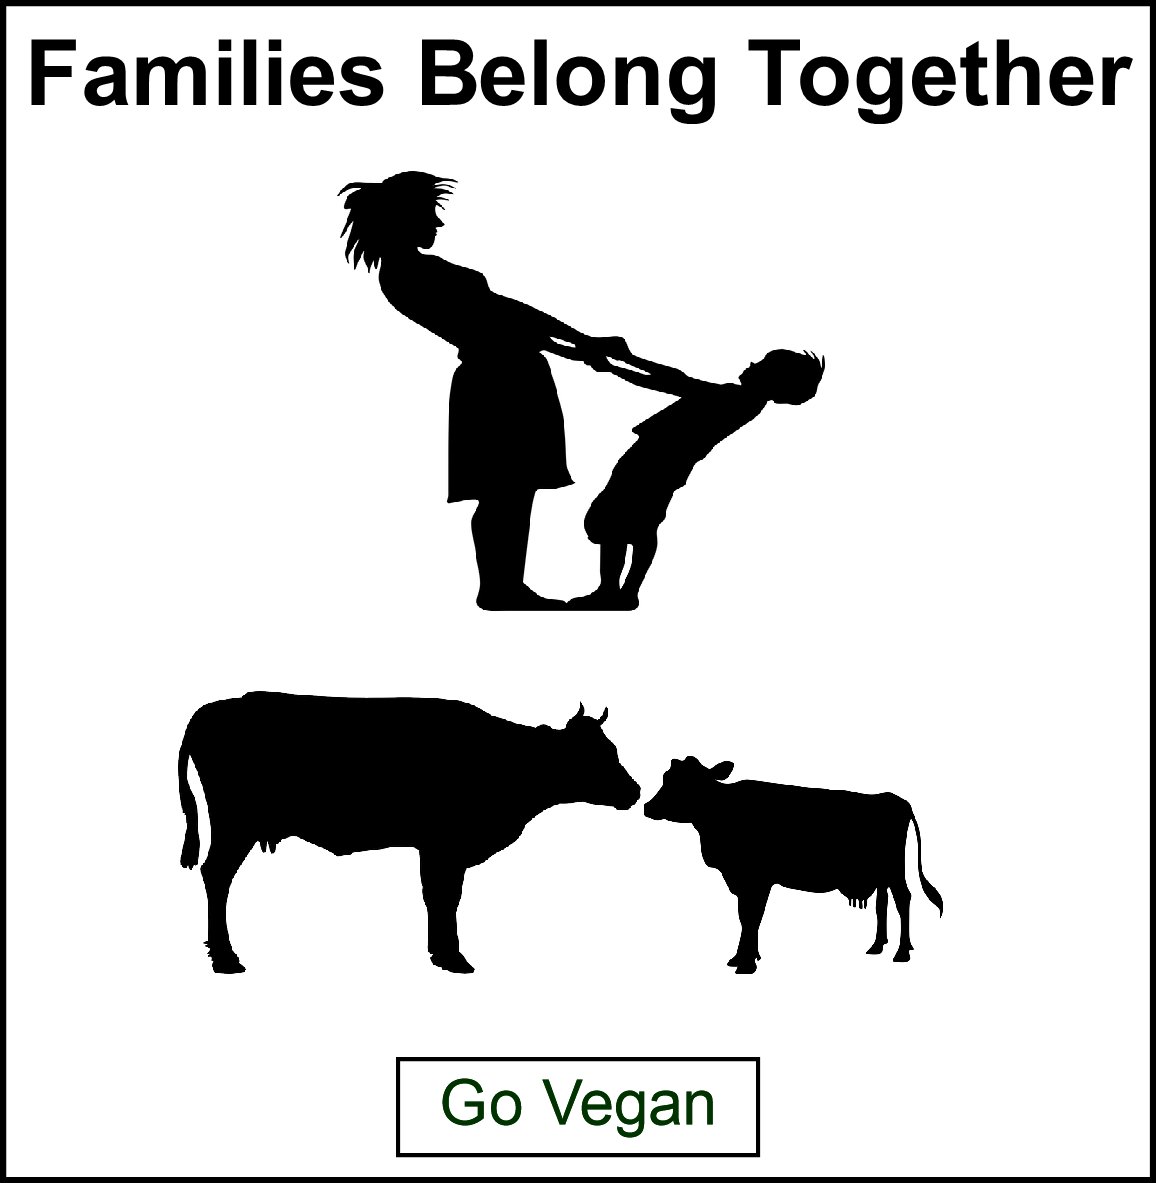 #familiesbelongtogether #keepfamiliestogether #families #vegan #ditchdairy #together